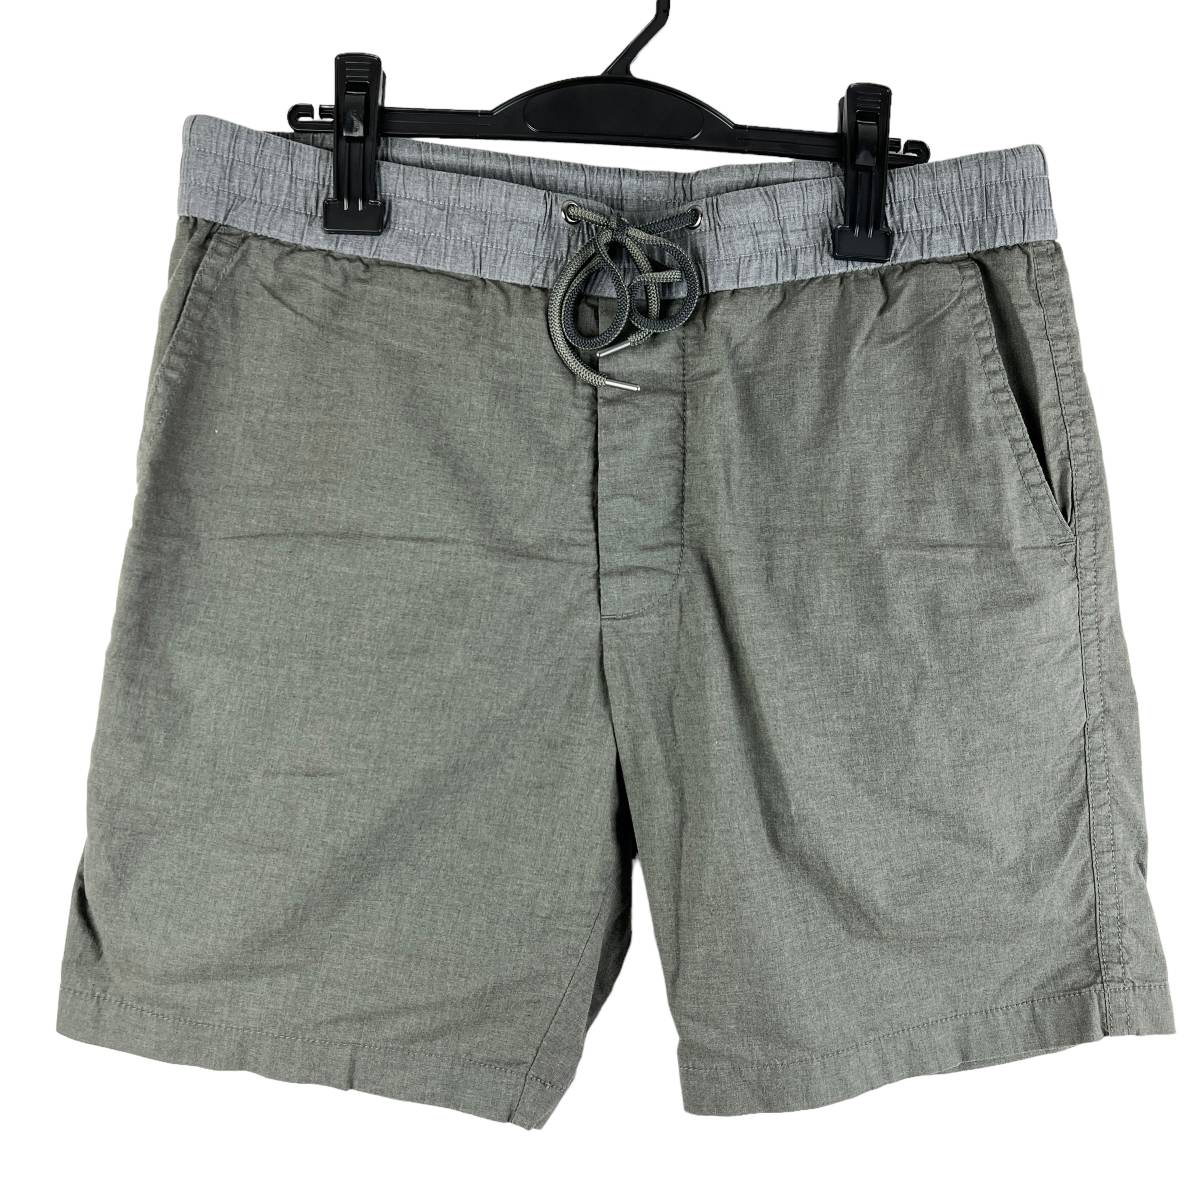 JAMESPERSE(ジェームスパース) Grey Belt Short Pants (khaki)